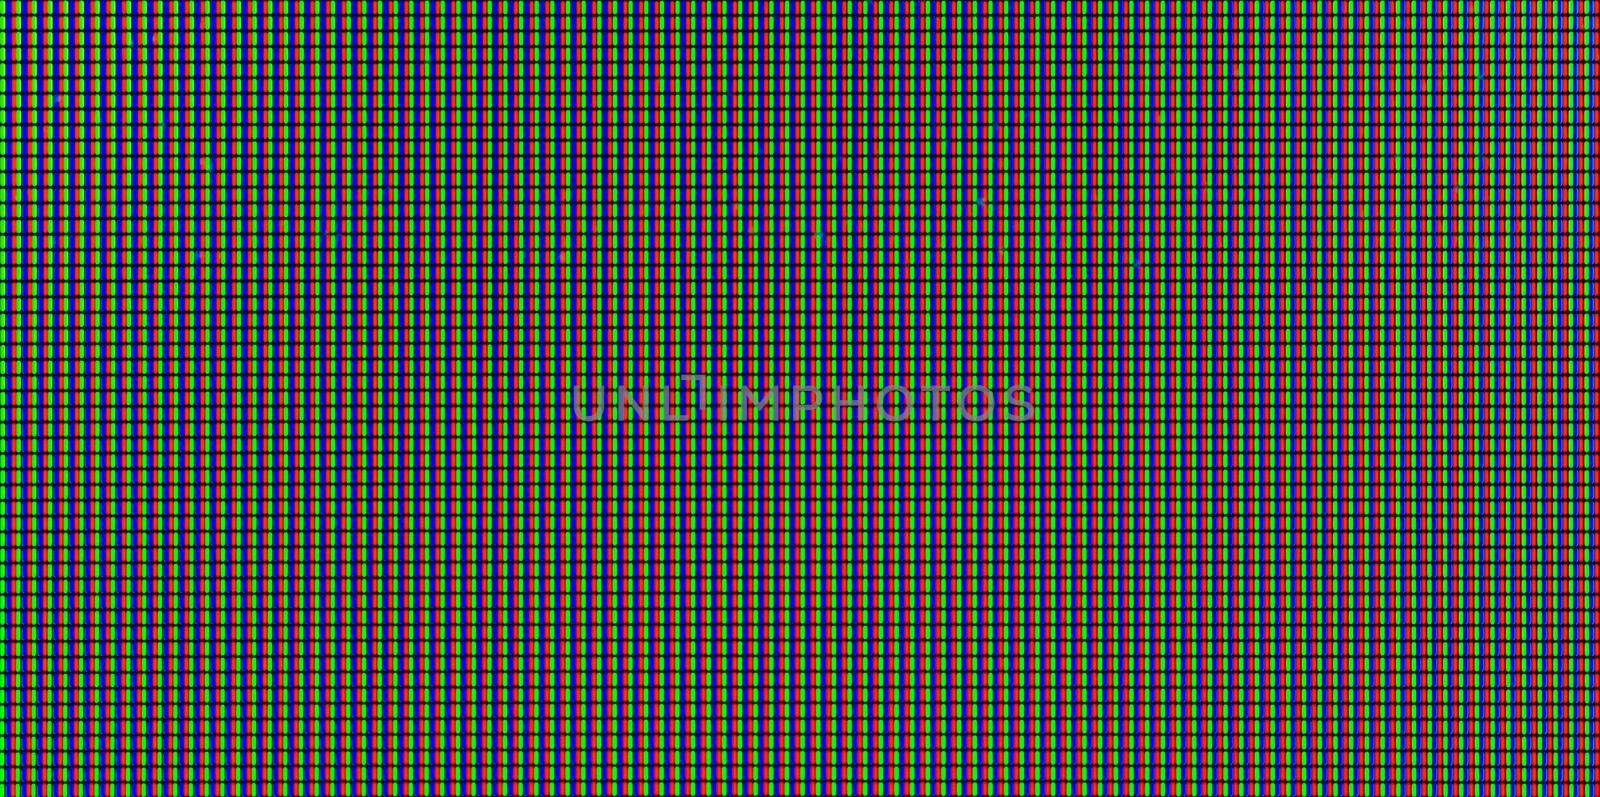 Macro shot of LCD computer screen, RGB pixels texture or background by dutourdumonde